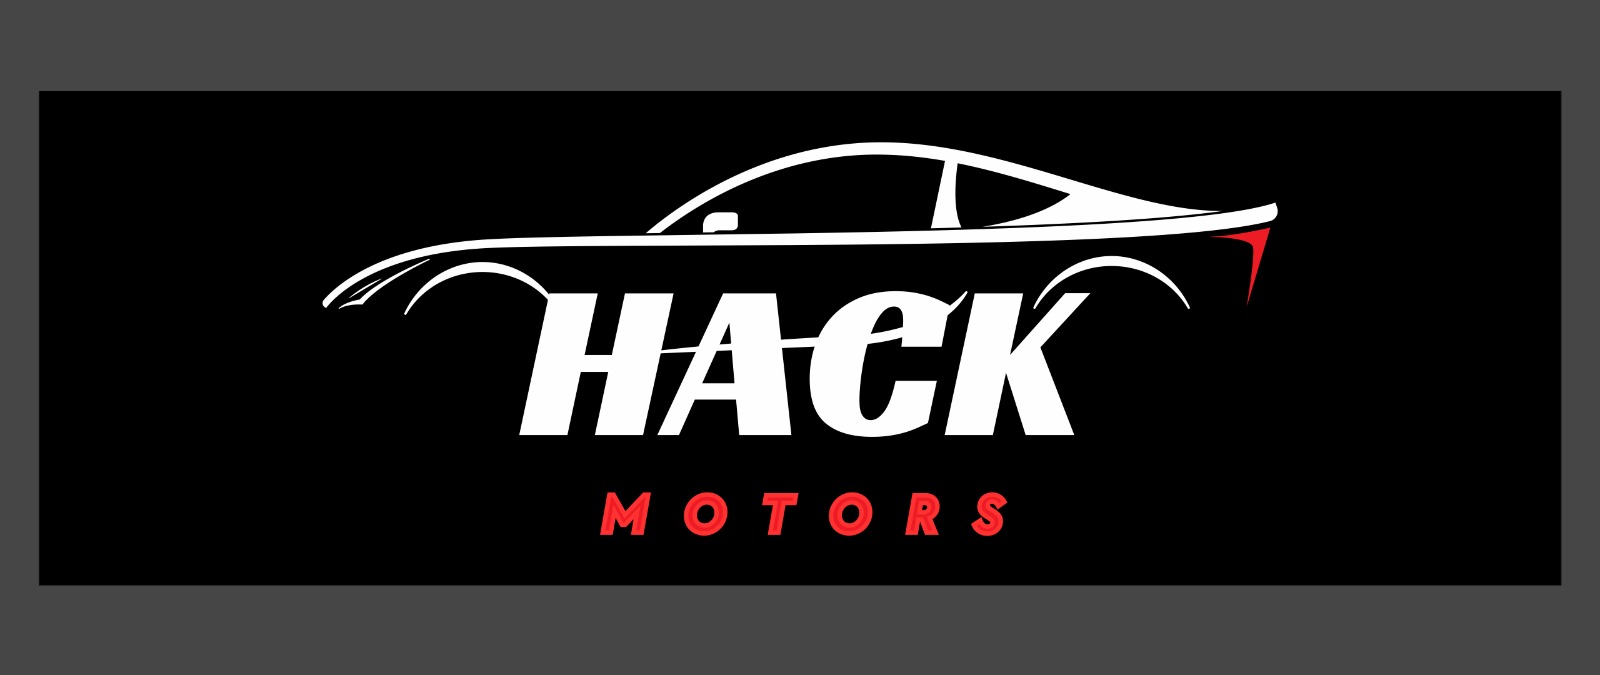 Hack Motors